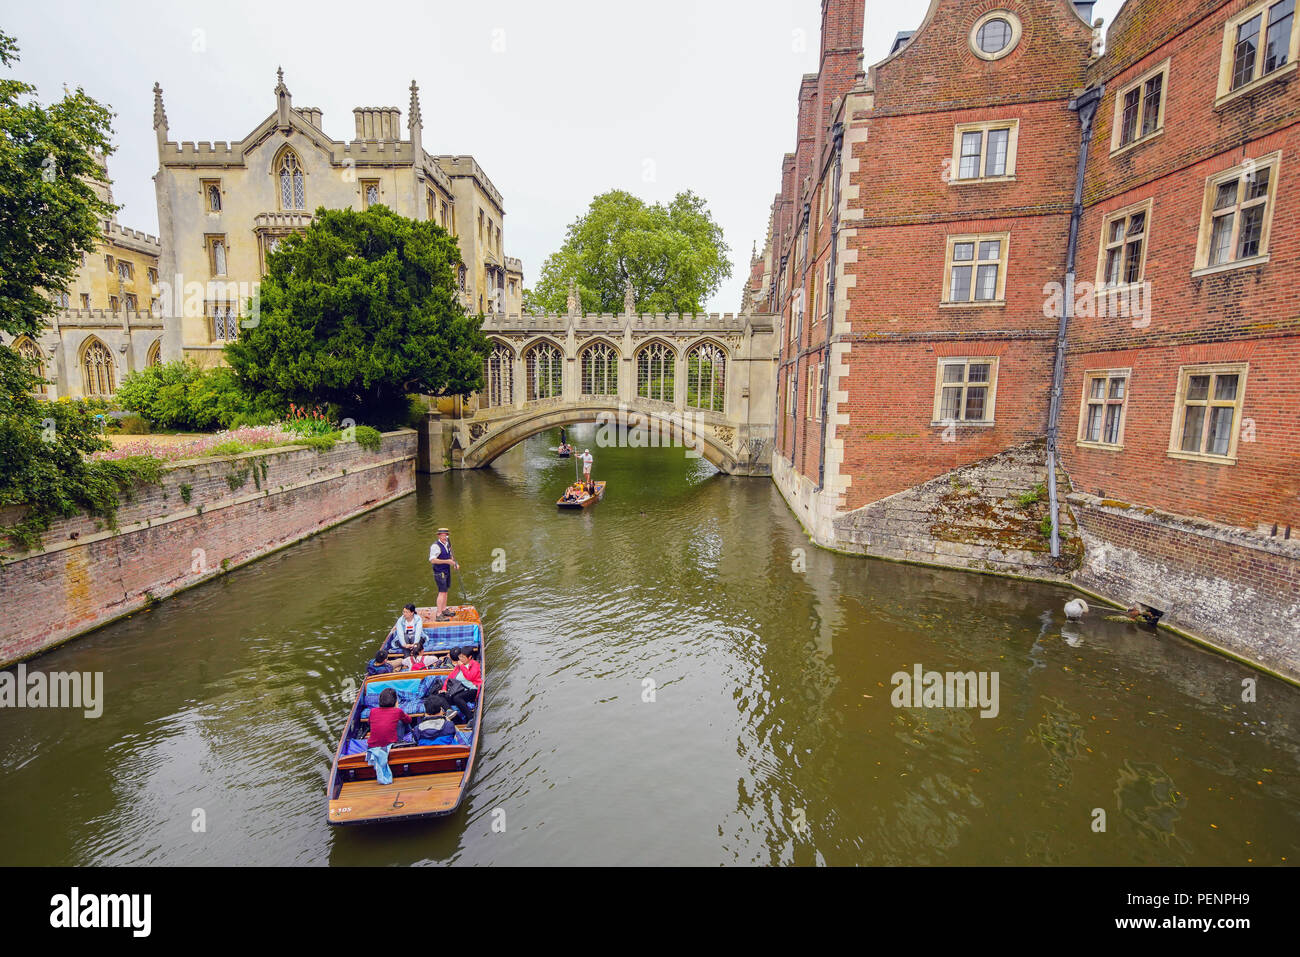 The Bridge of Sighs. St Johns College in Cambridge, England, U.K. Stock Photo